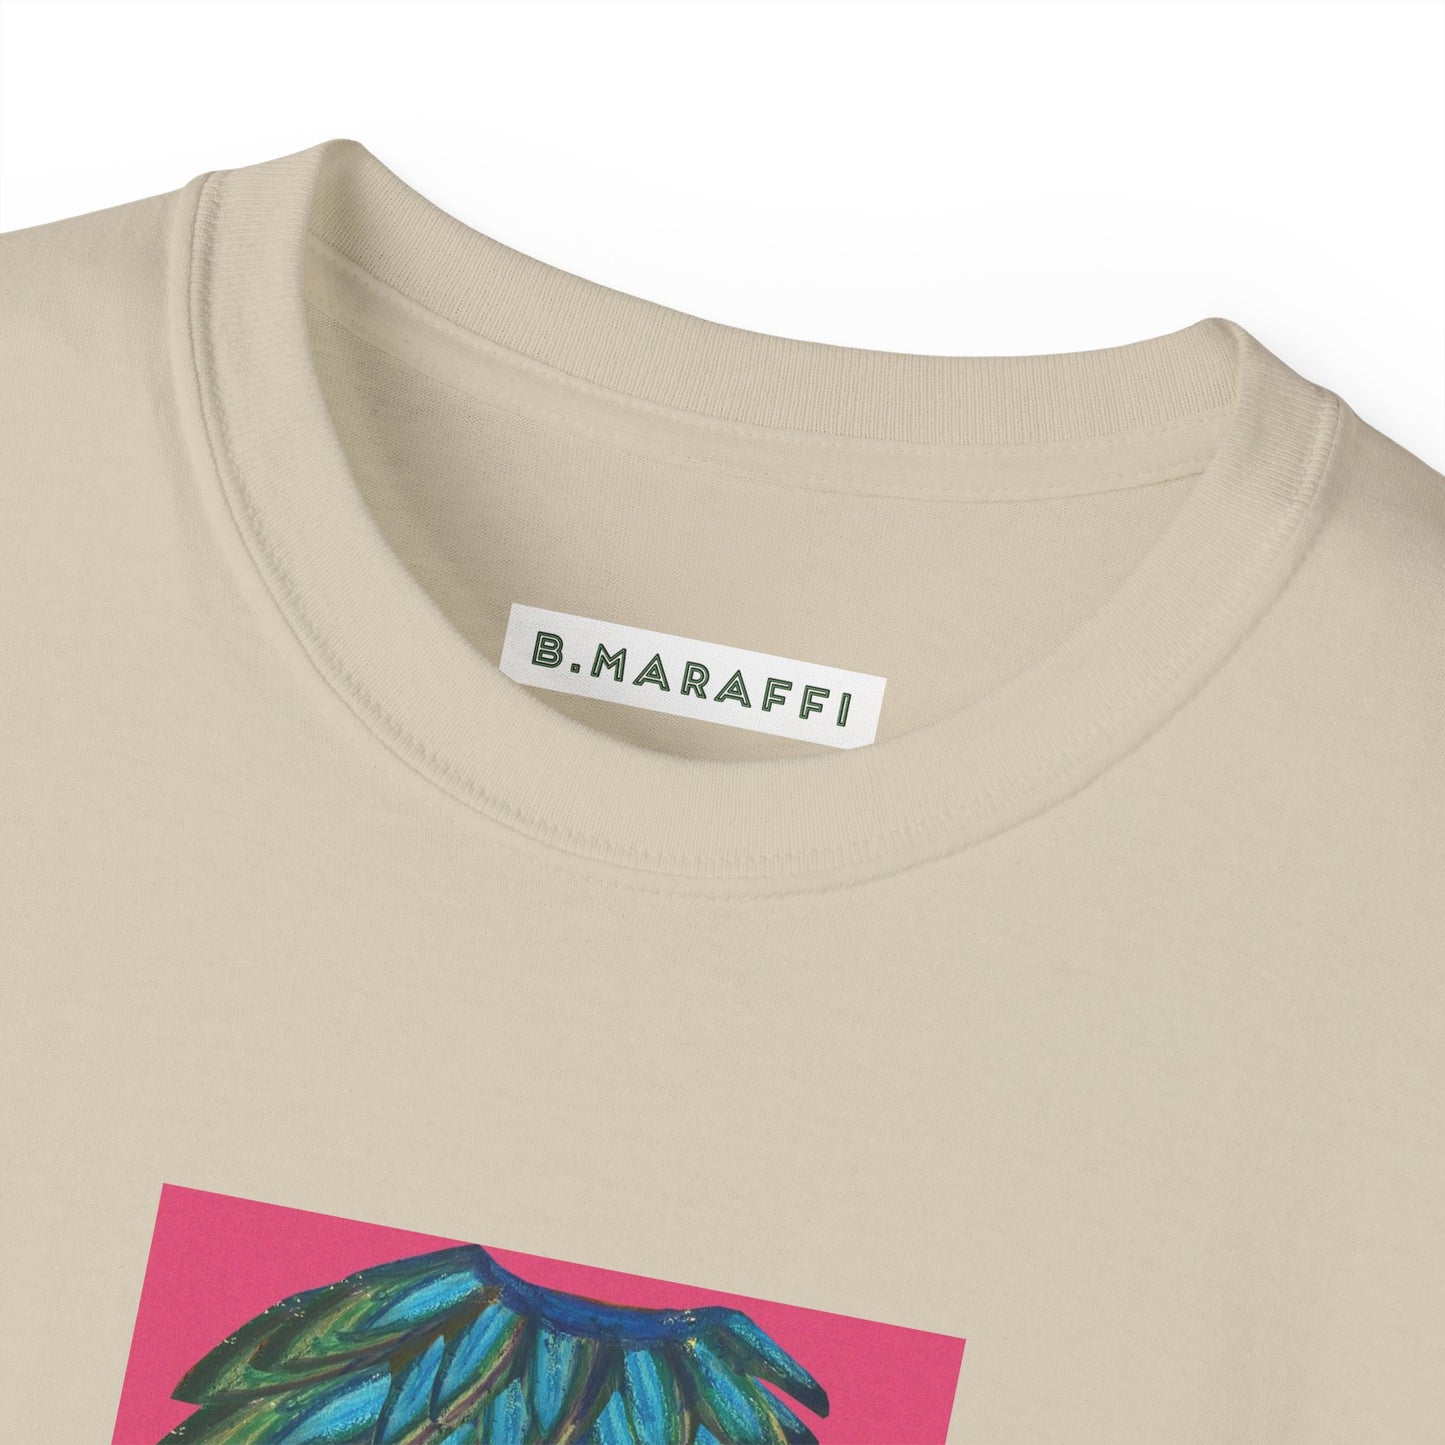 B.Maraffi Cotton T-shirt - Tiki Palm Fuscia